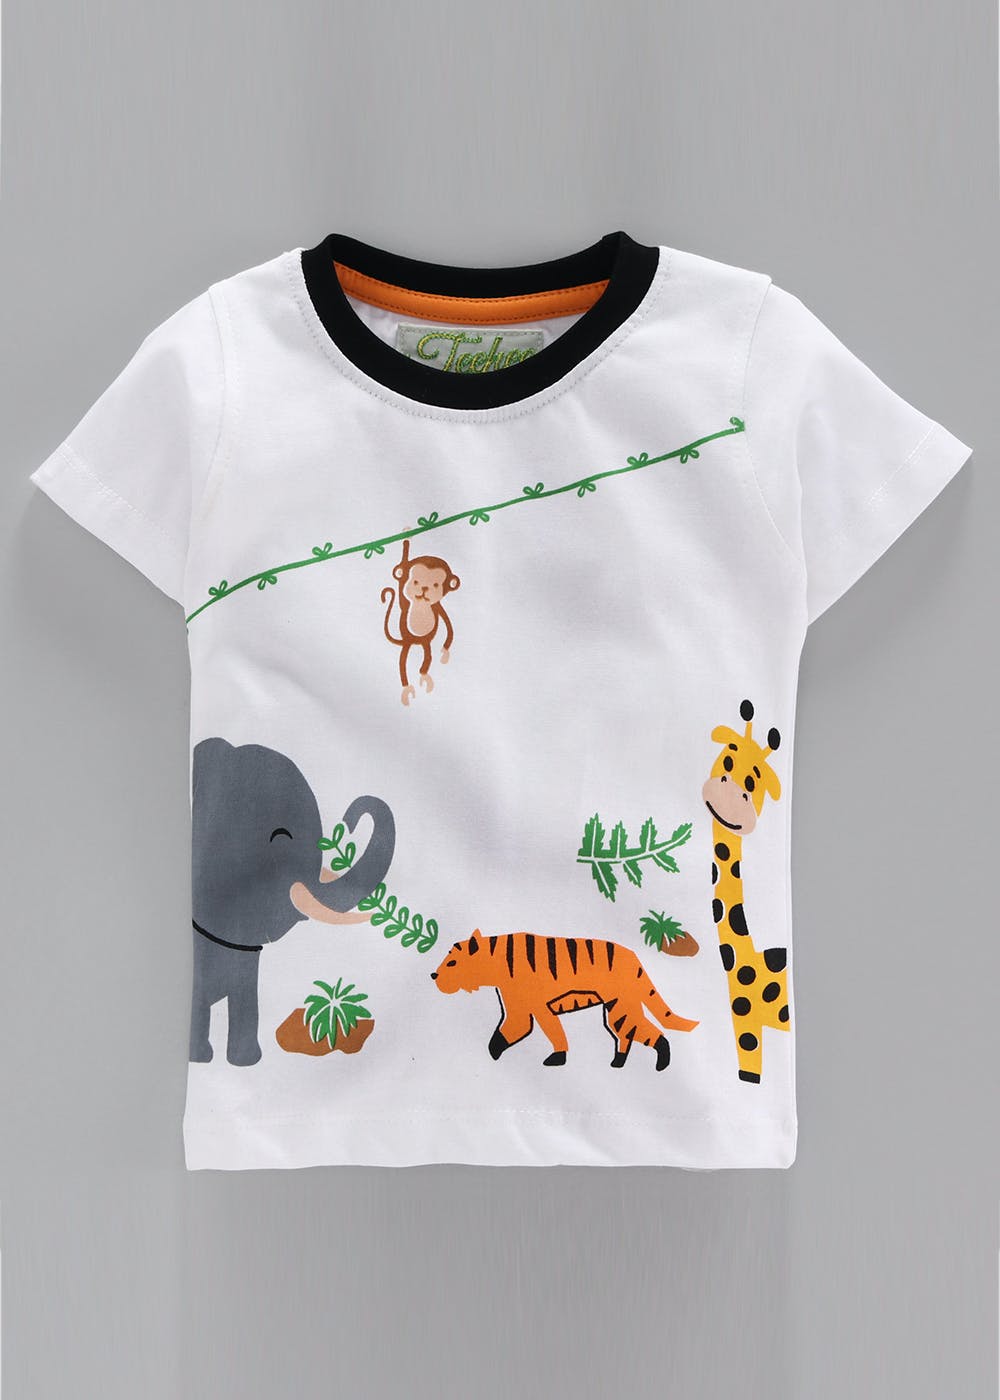 Get Multi Animals Printed White T-Shirt at ₹ 630 | LBB Shop